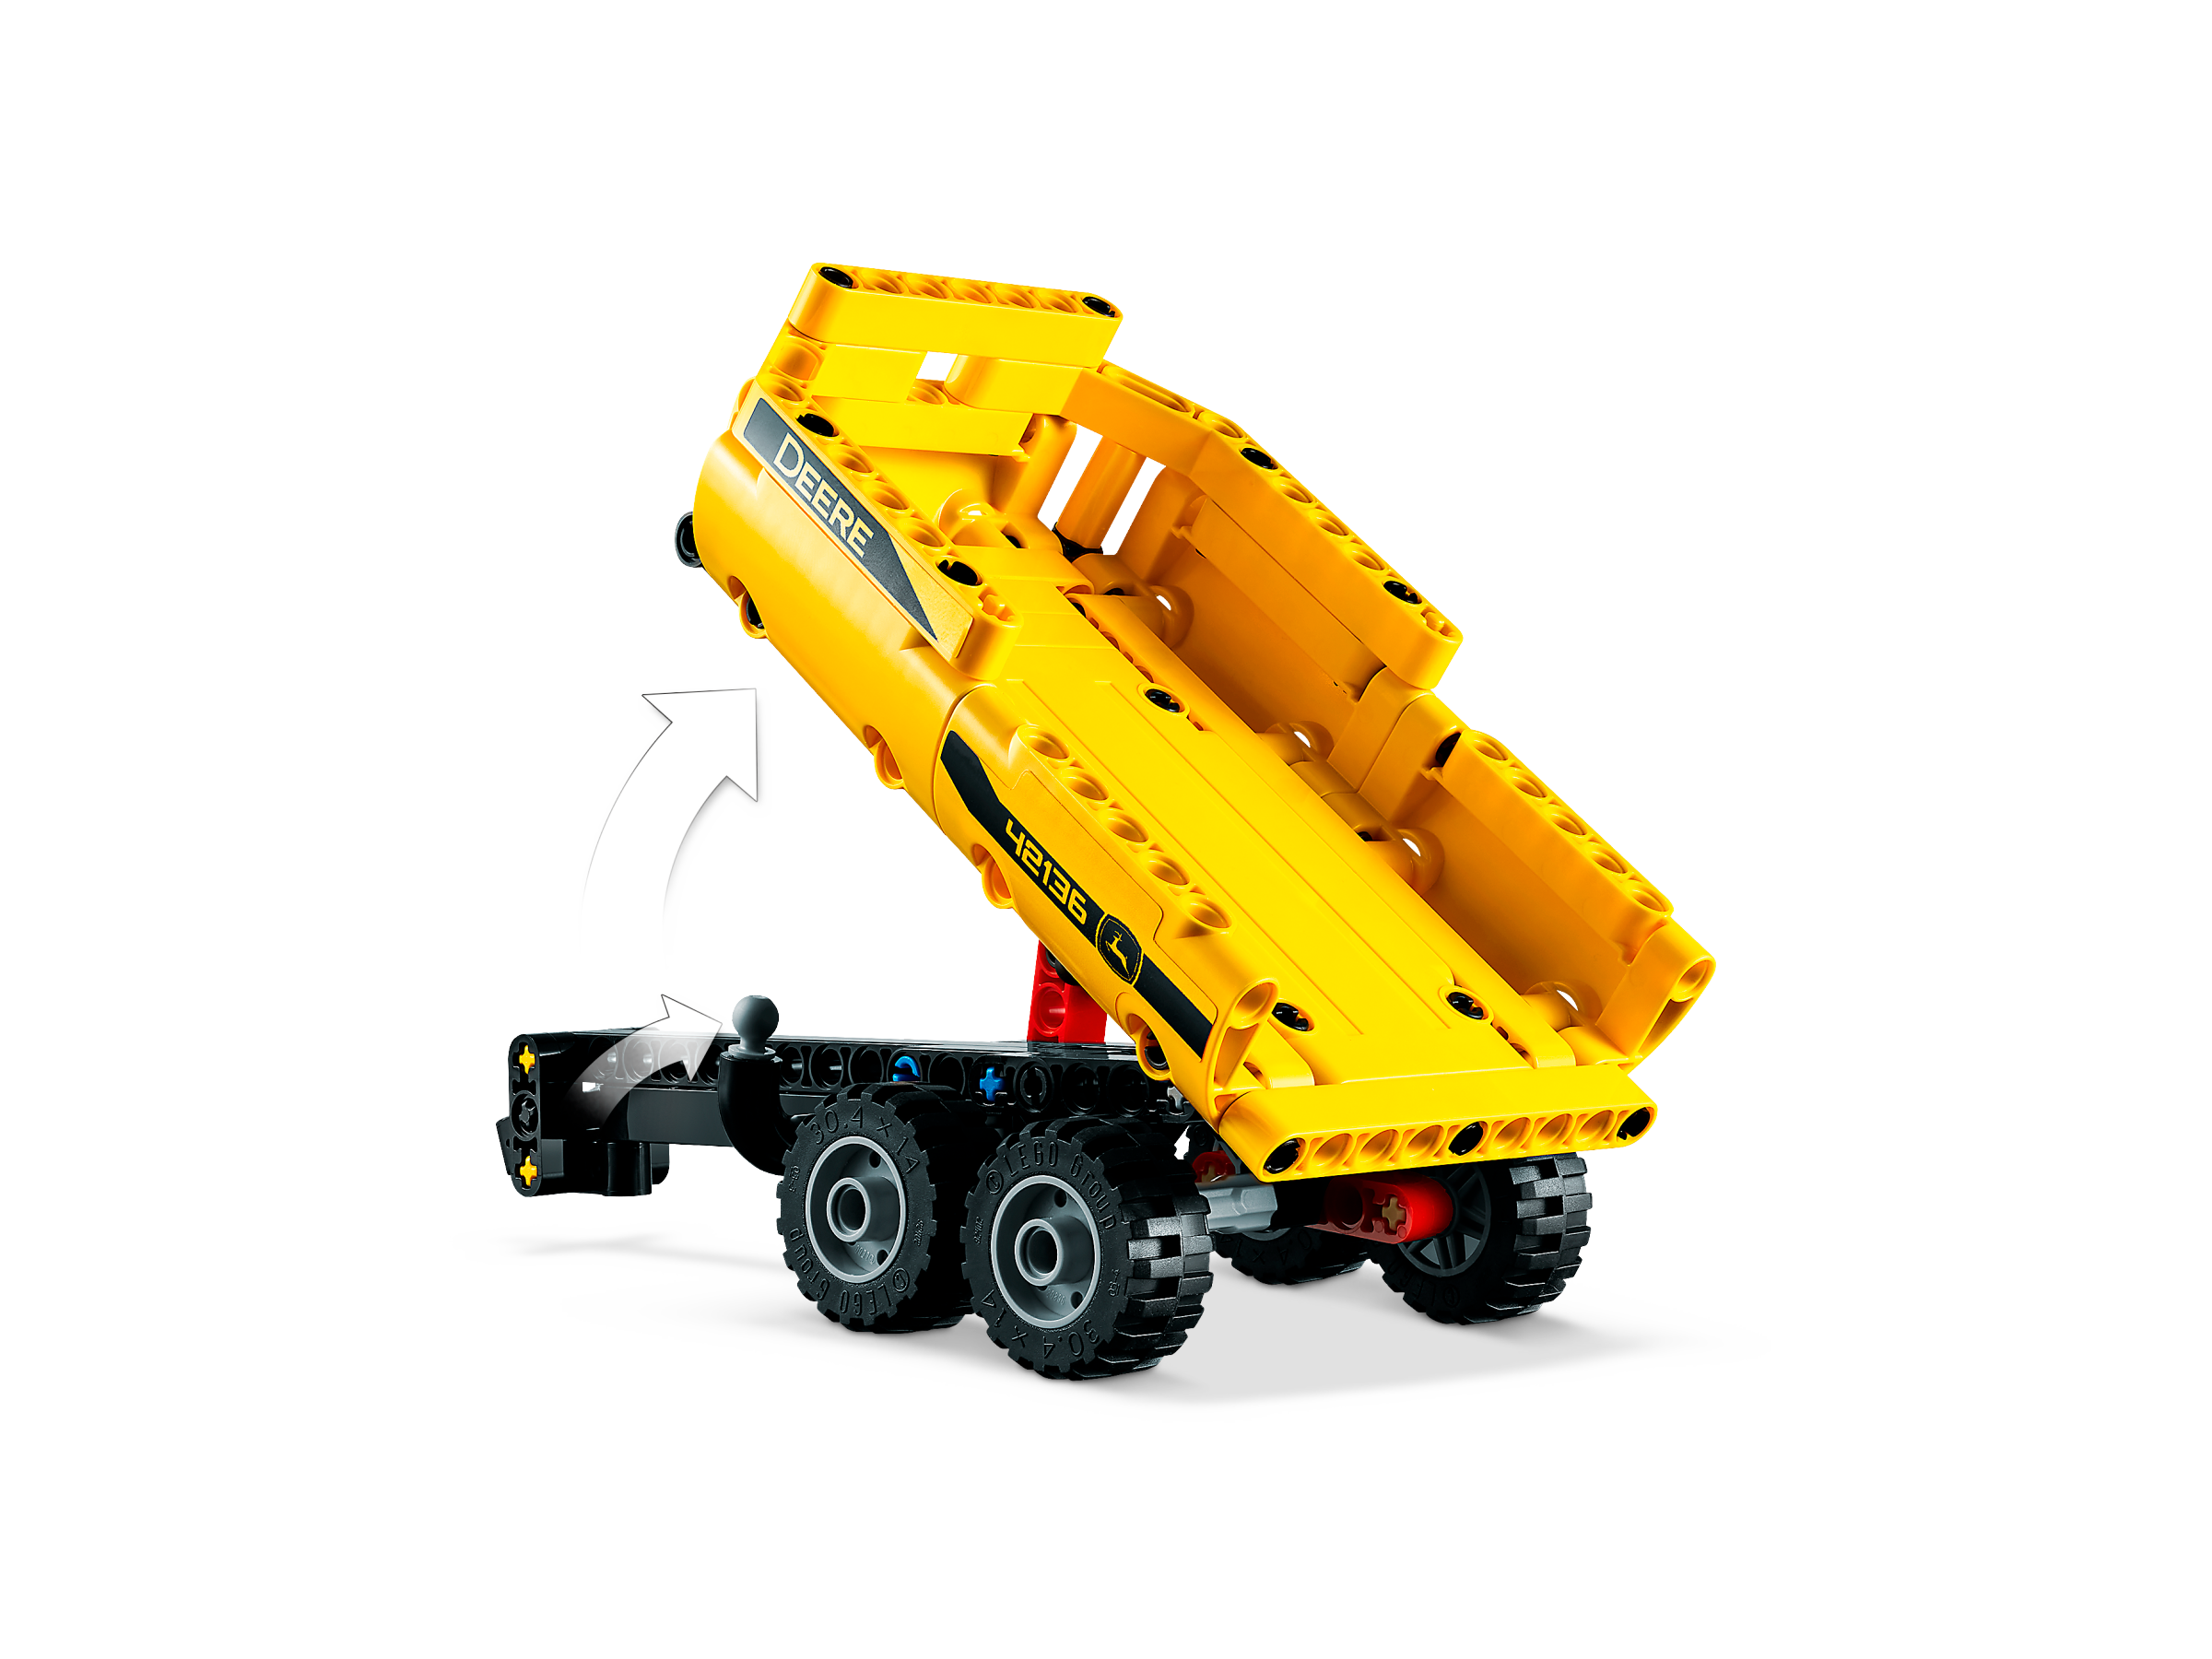 42136 - LEGO® Technic - Tracteur John Deere 9620R 4WD LEGO : King